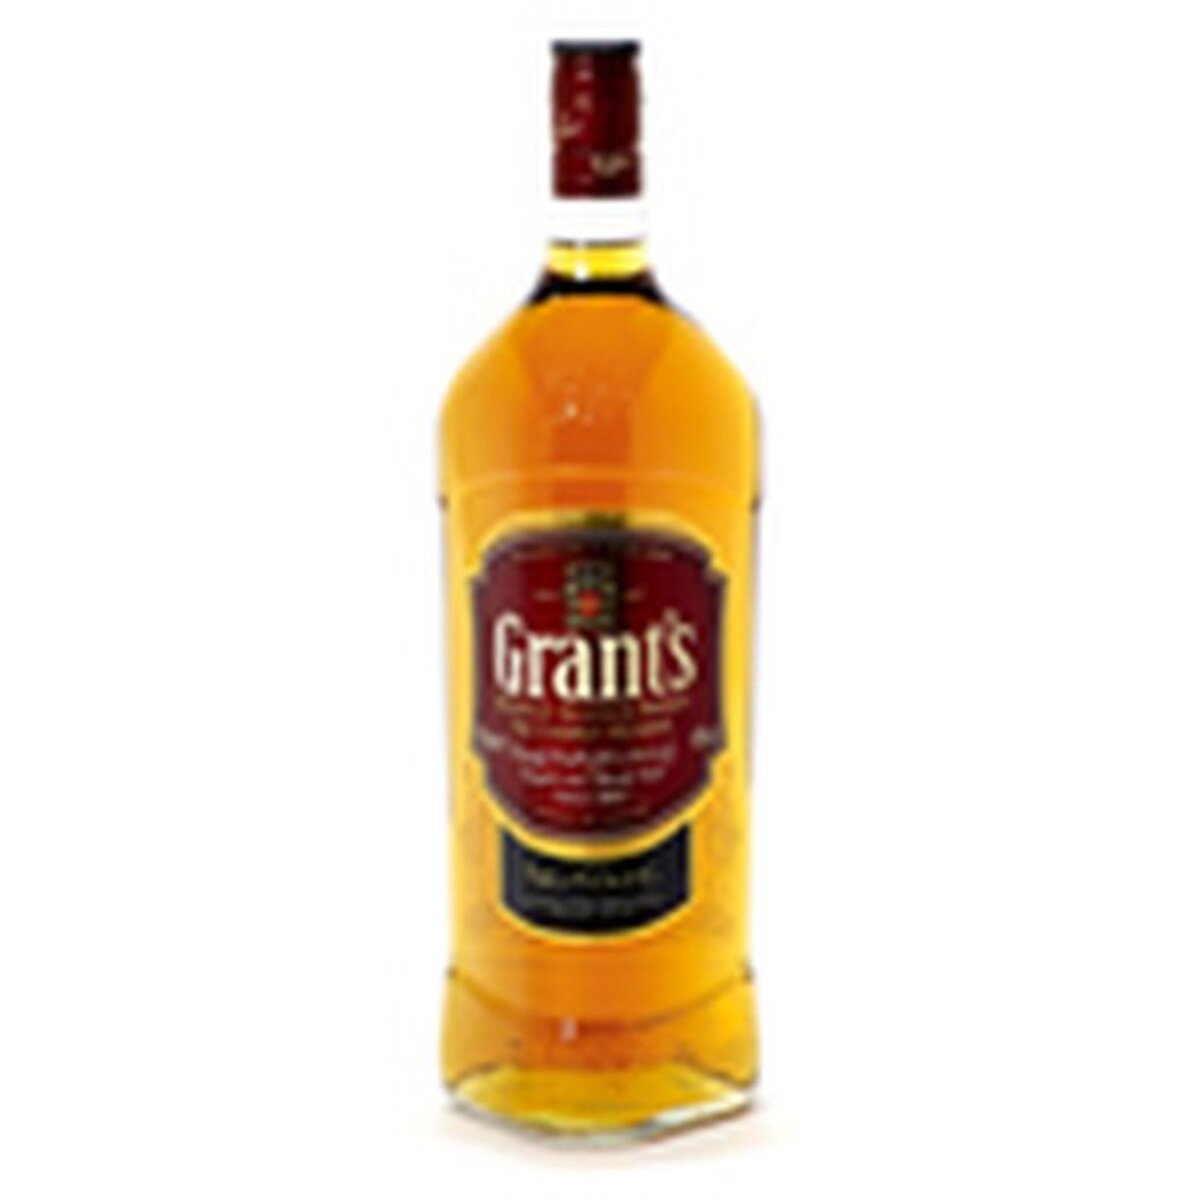 GRANTS Grant's whisky 40° -150cl